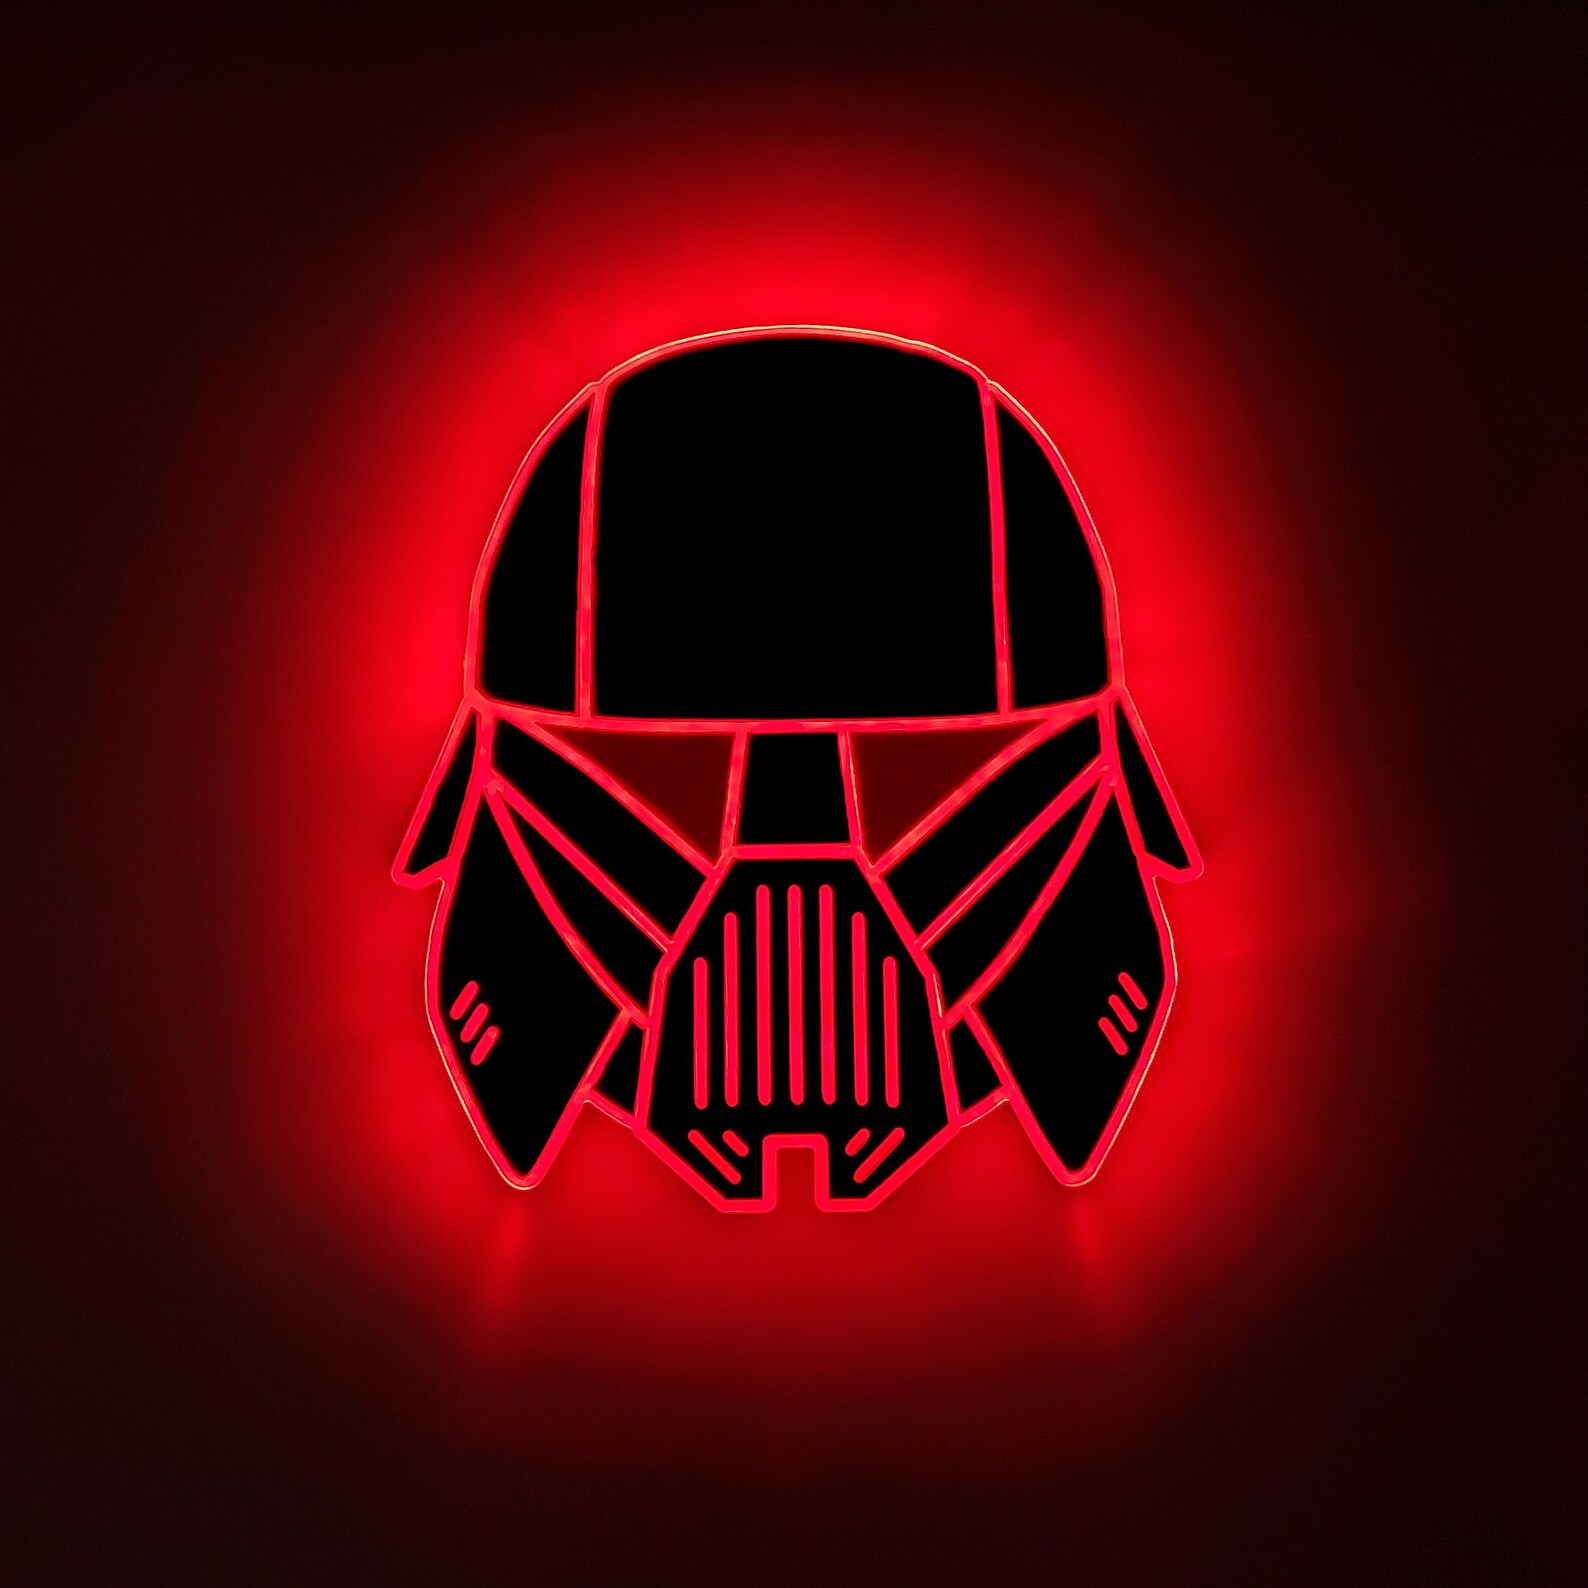 TM Imperial Dark Trooper Neon LED Light Wall Decor Sign 2